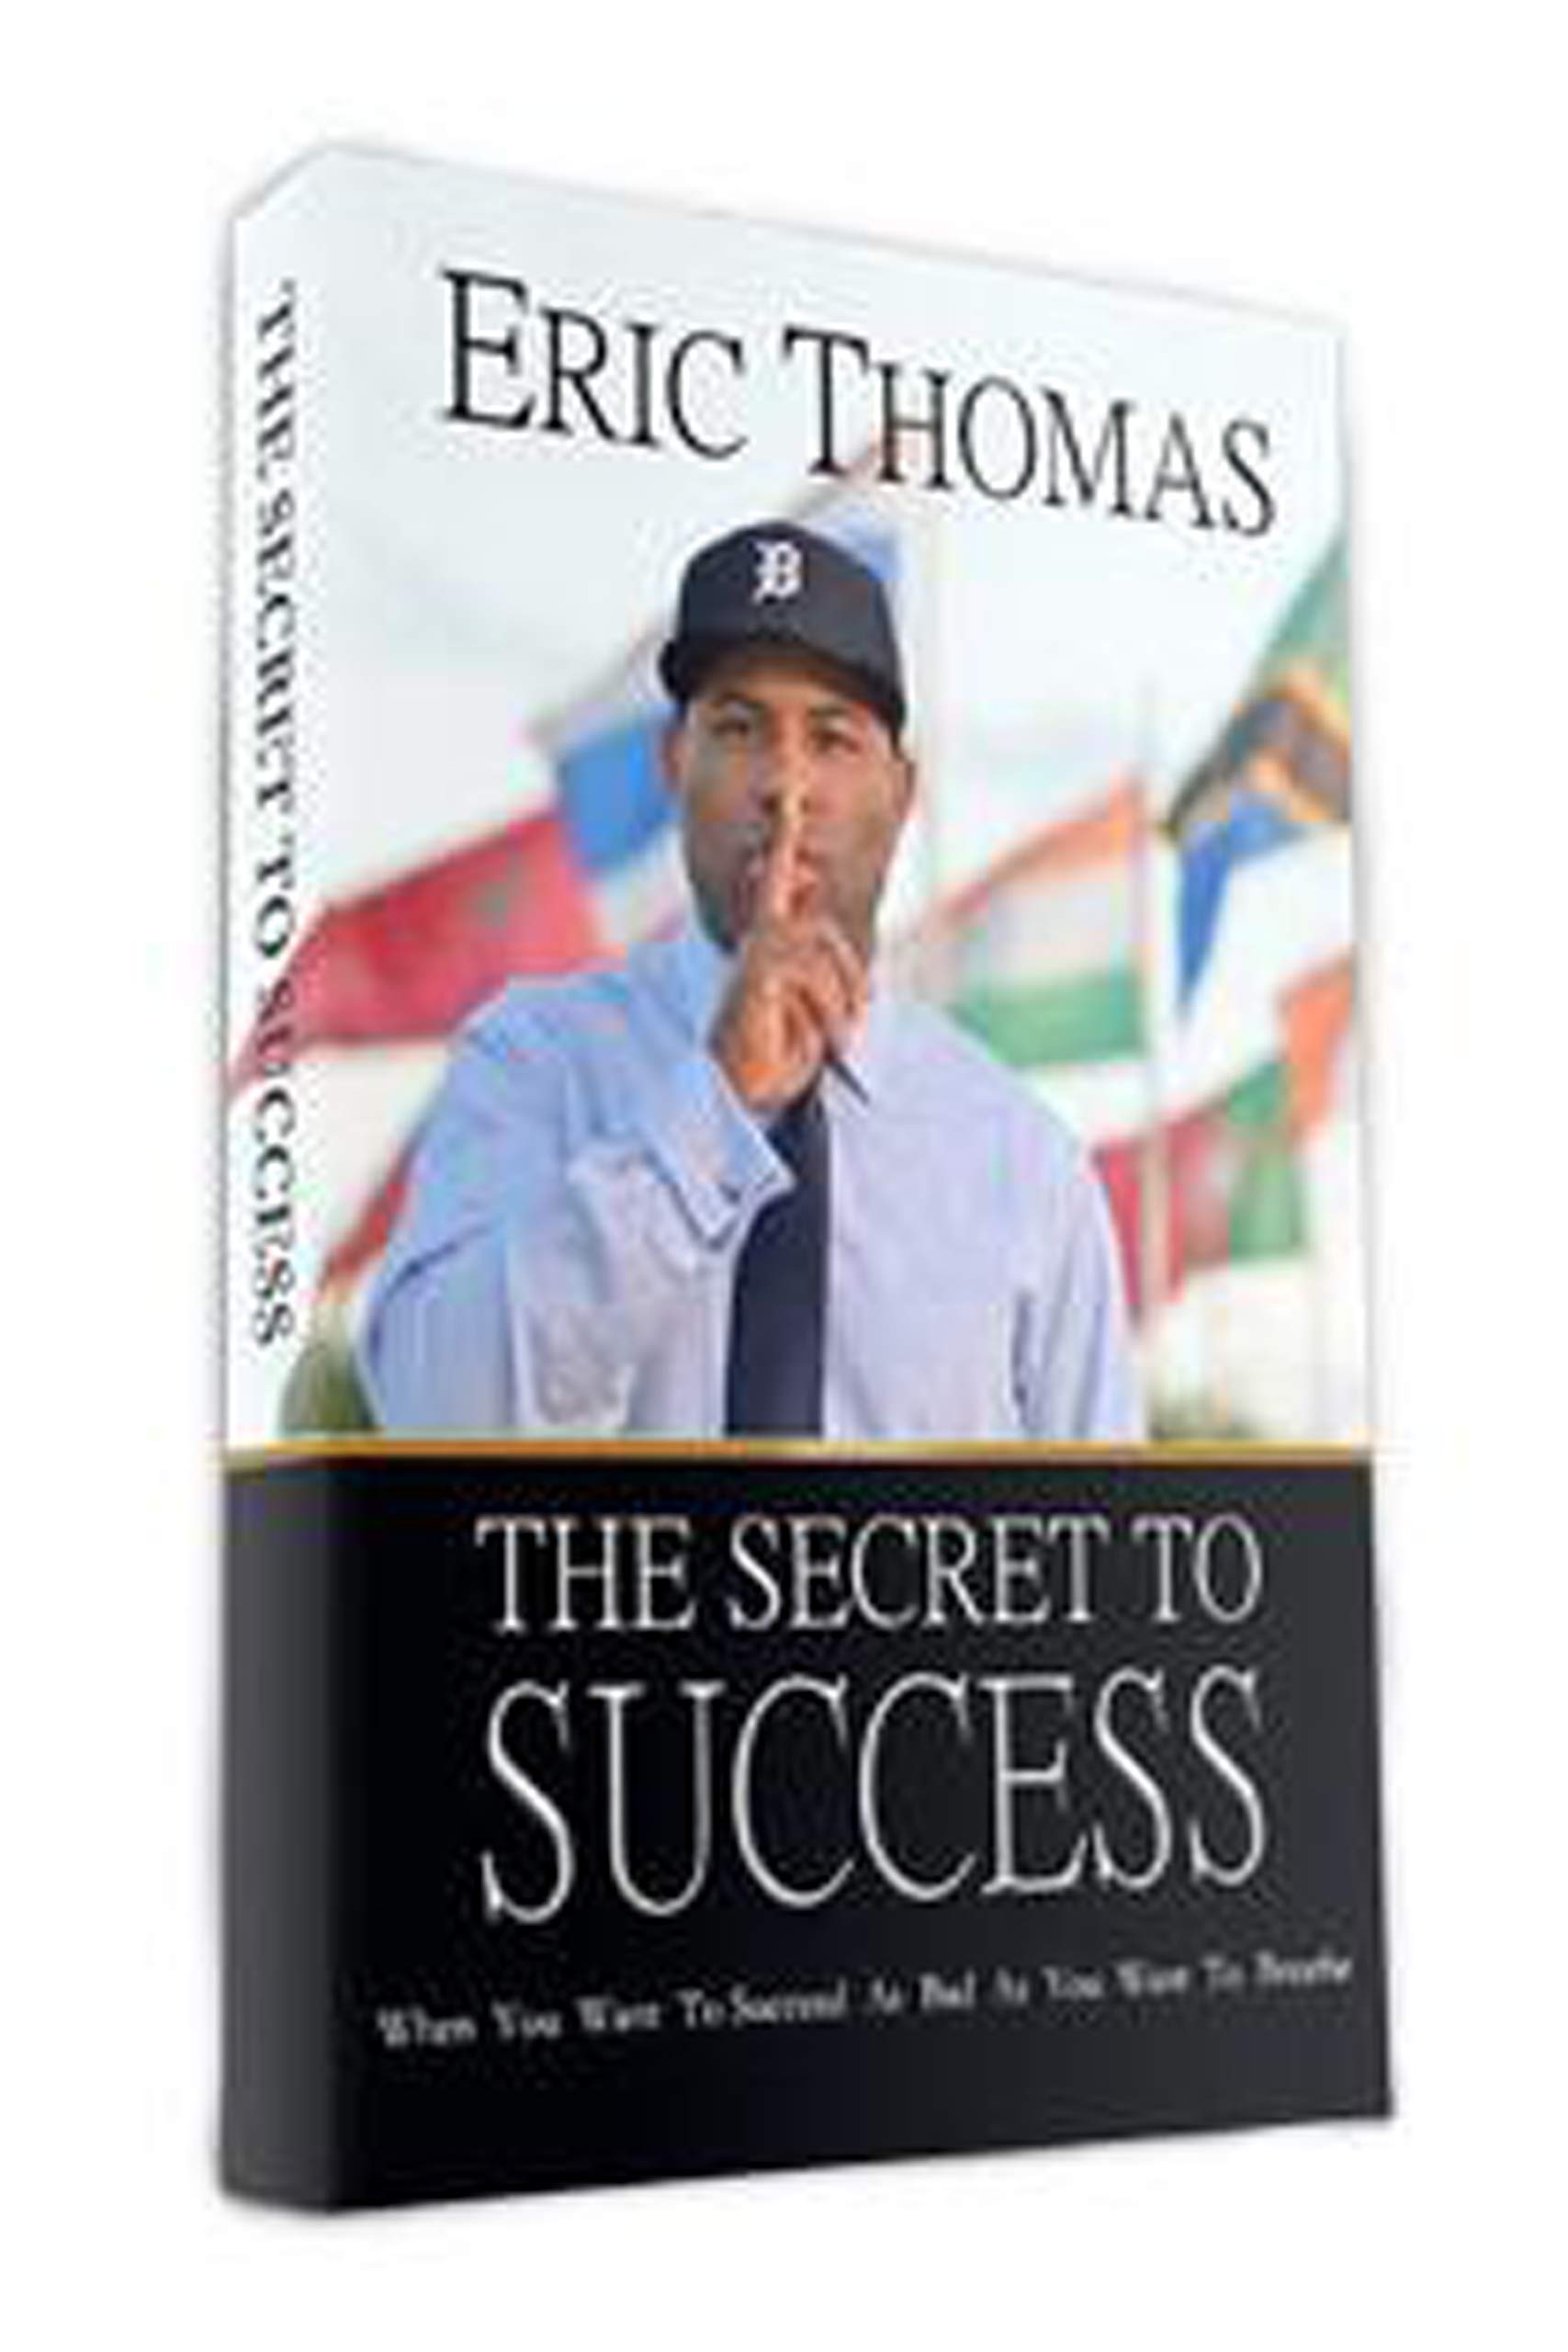 Eric Thomas's book